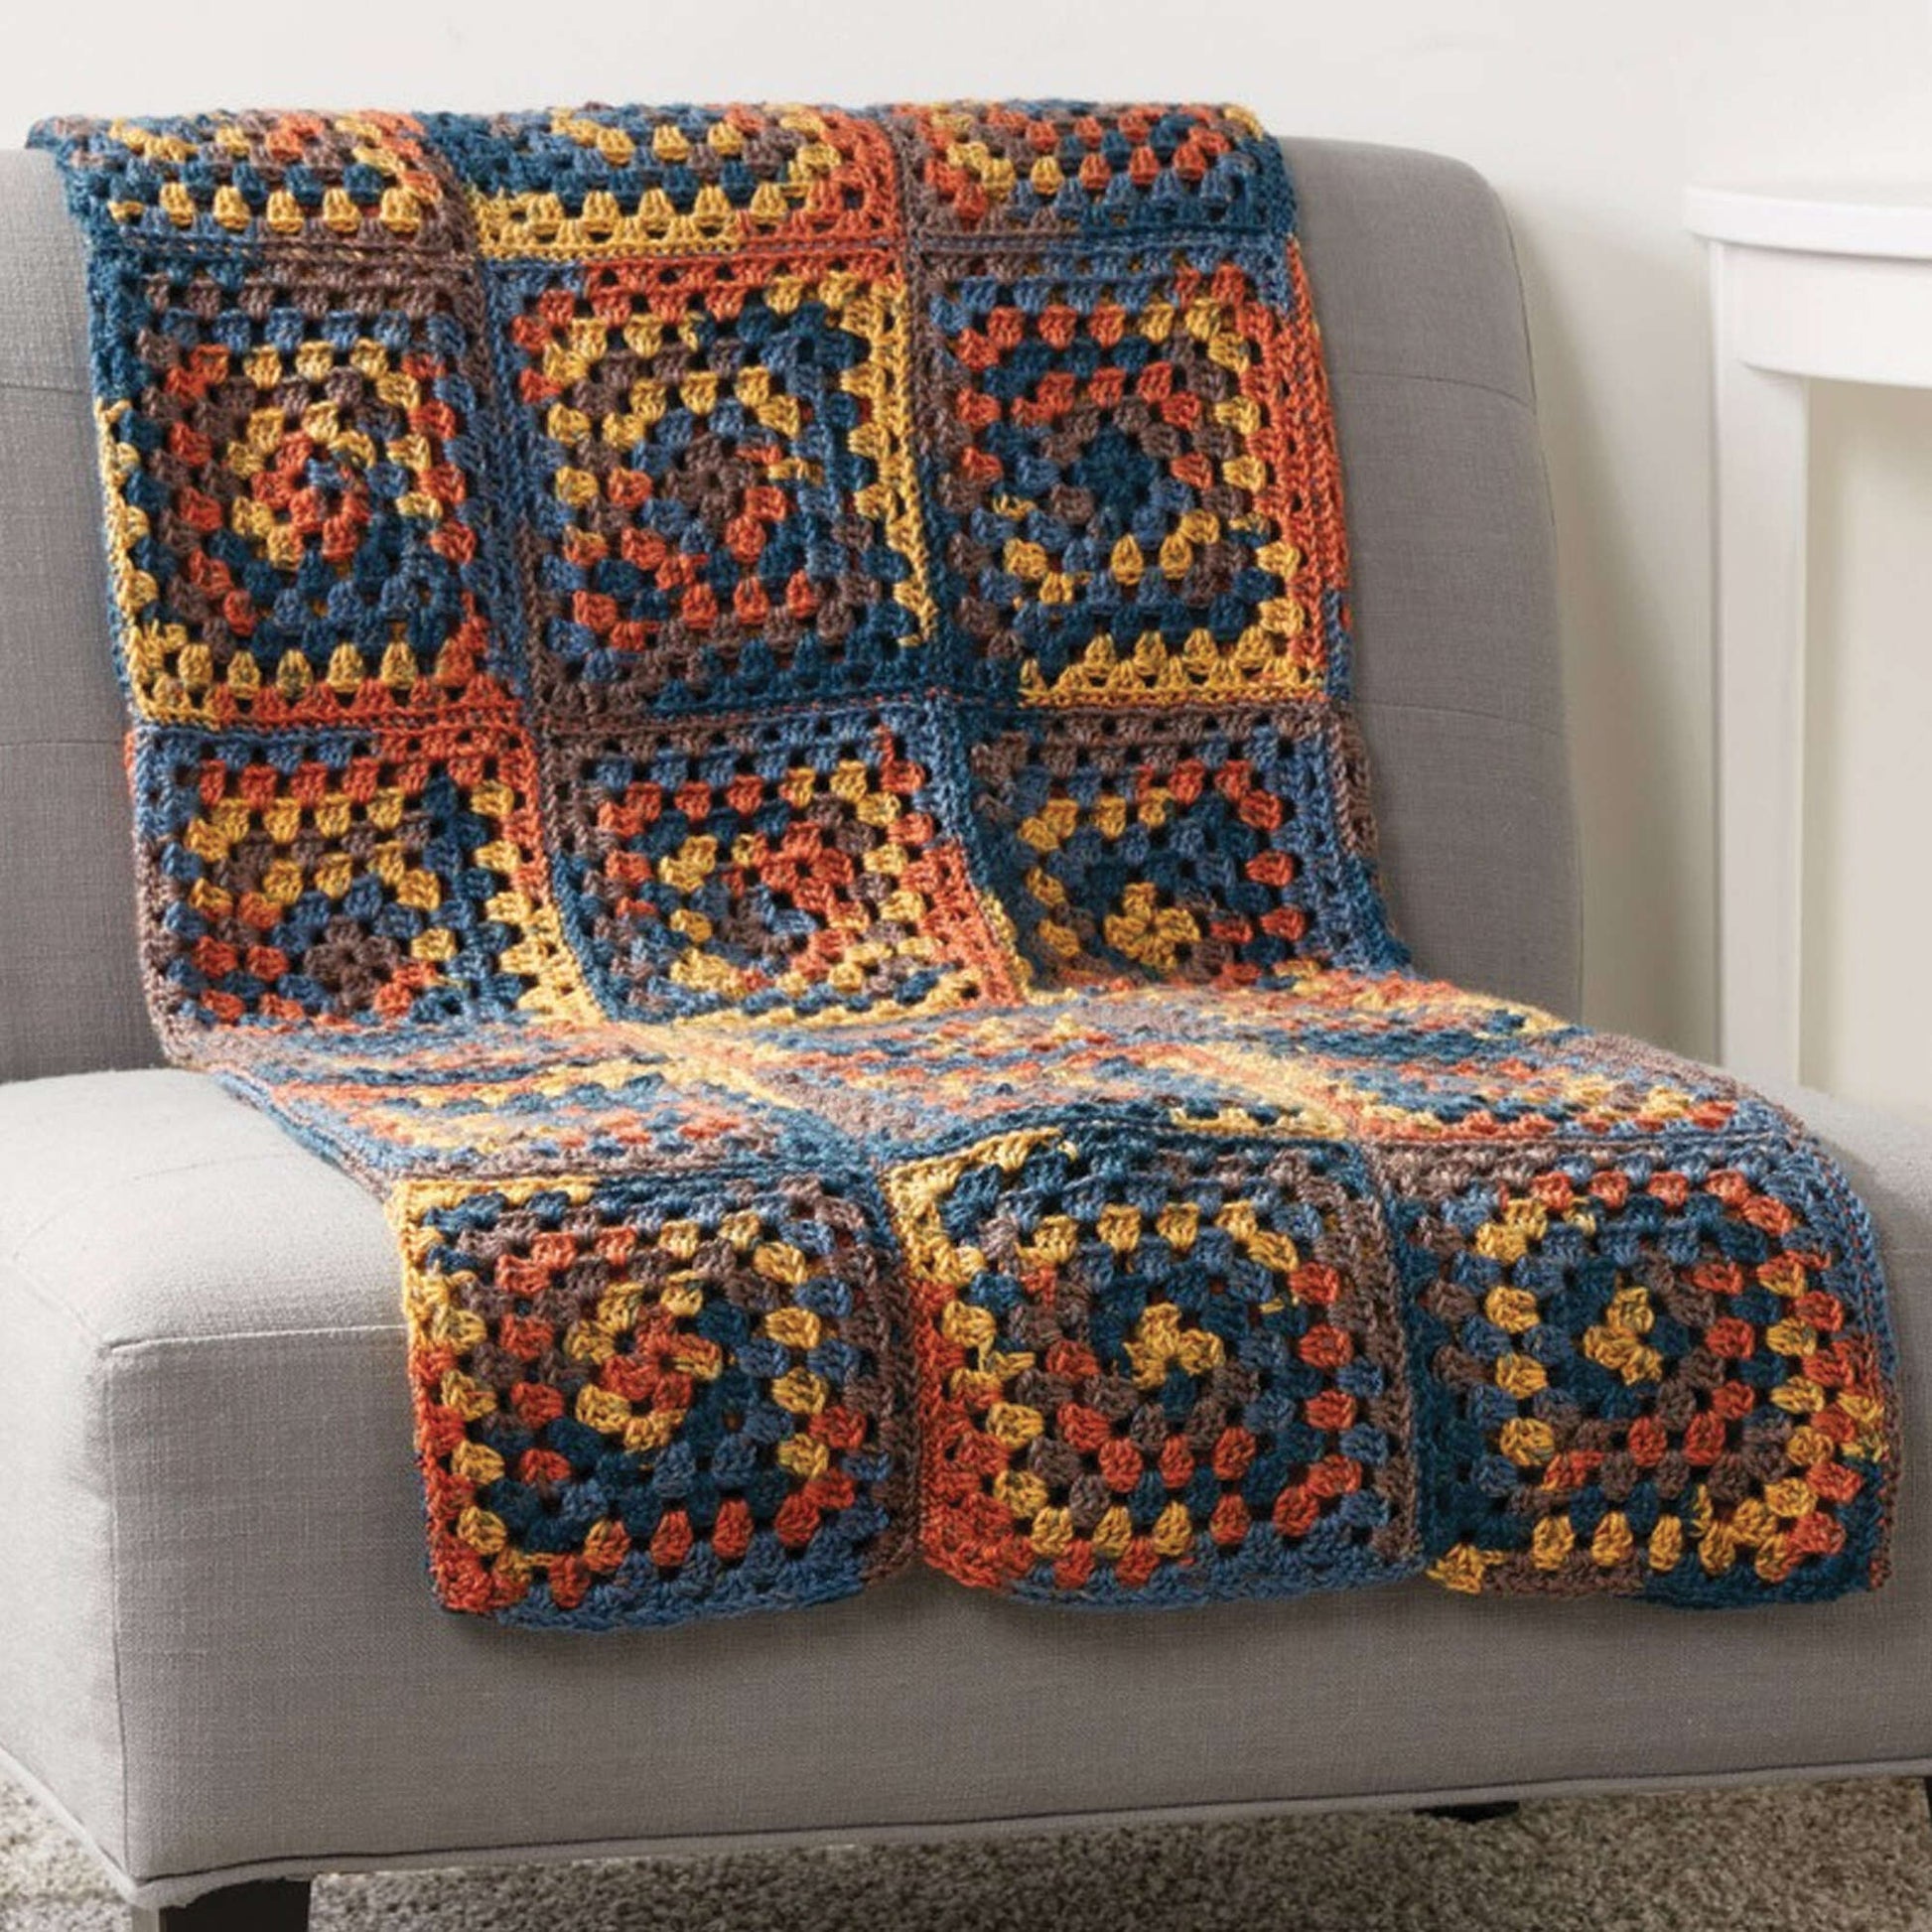 Free Caron Square Deal Crochet Blanket Pattern